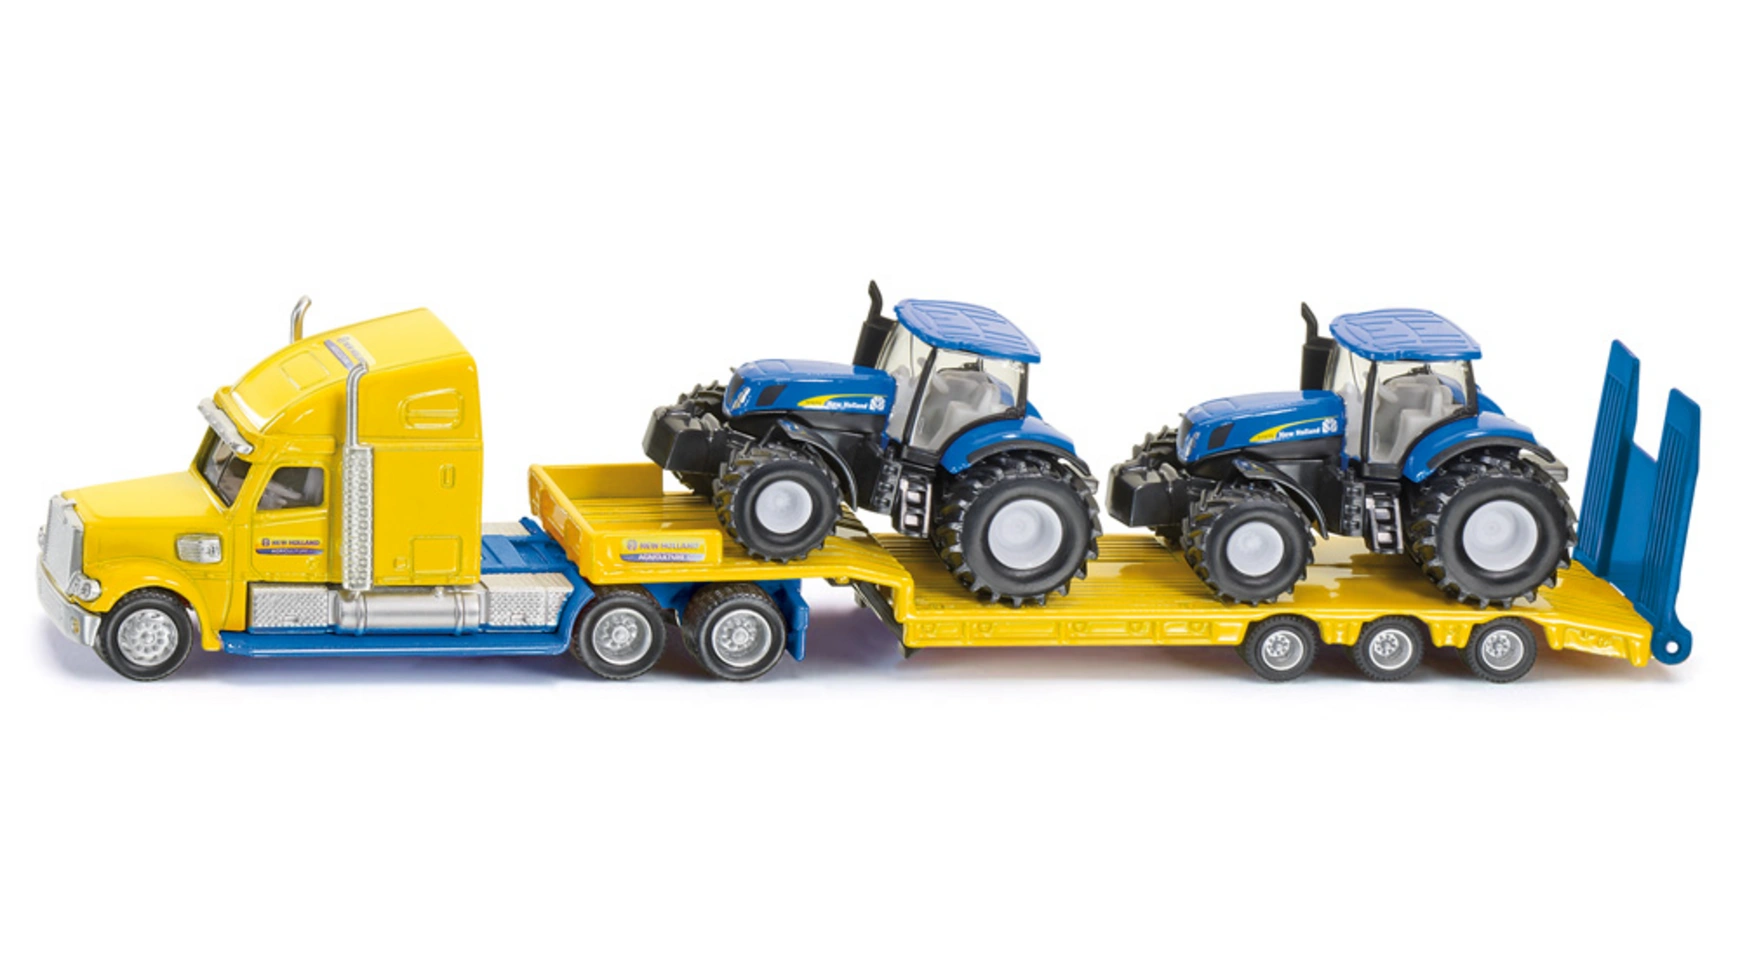 Farmer грузовик с тракторами new holland Siku набор техники siku тягач new holland с 2 тракторами 1805 1 87 22 3 см желтый синий